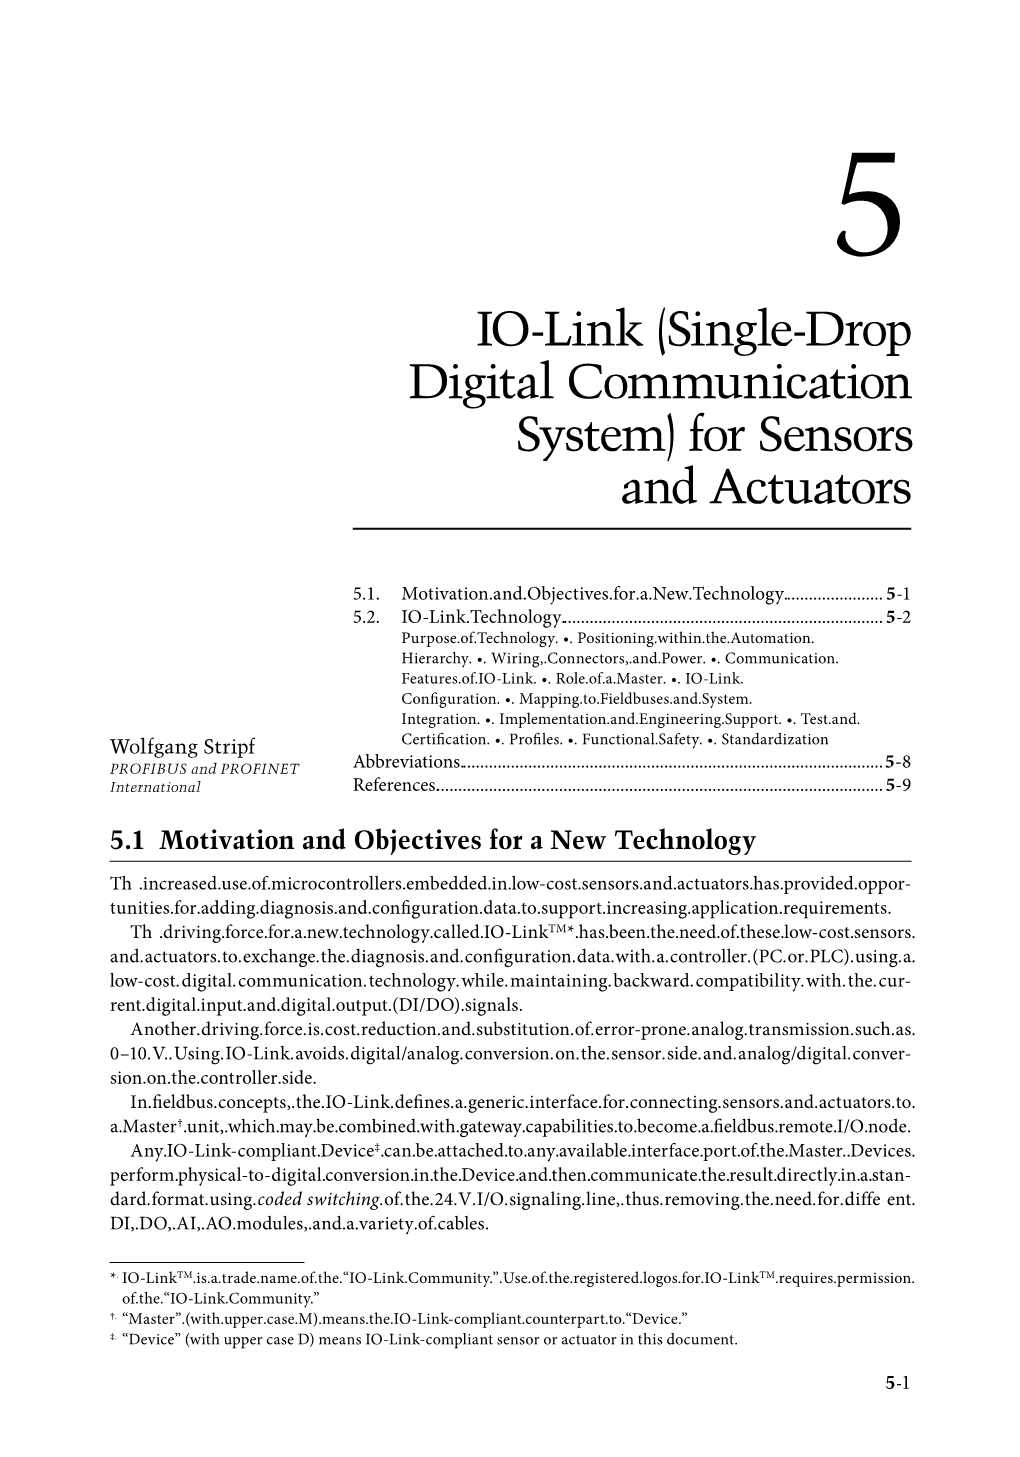 IO-Link (Single-Drop Digital Communication System) for Sensors and Actuators